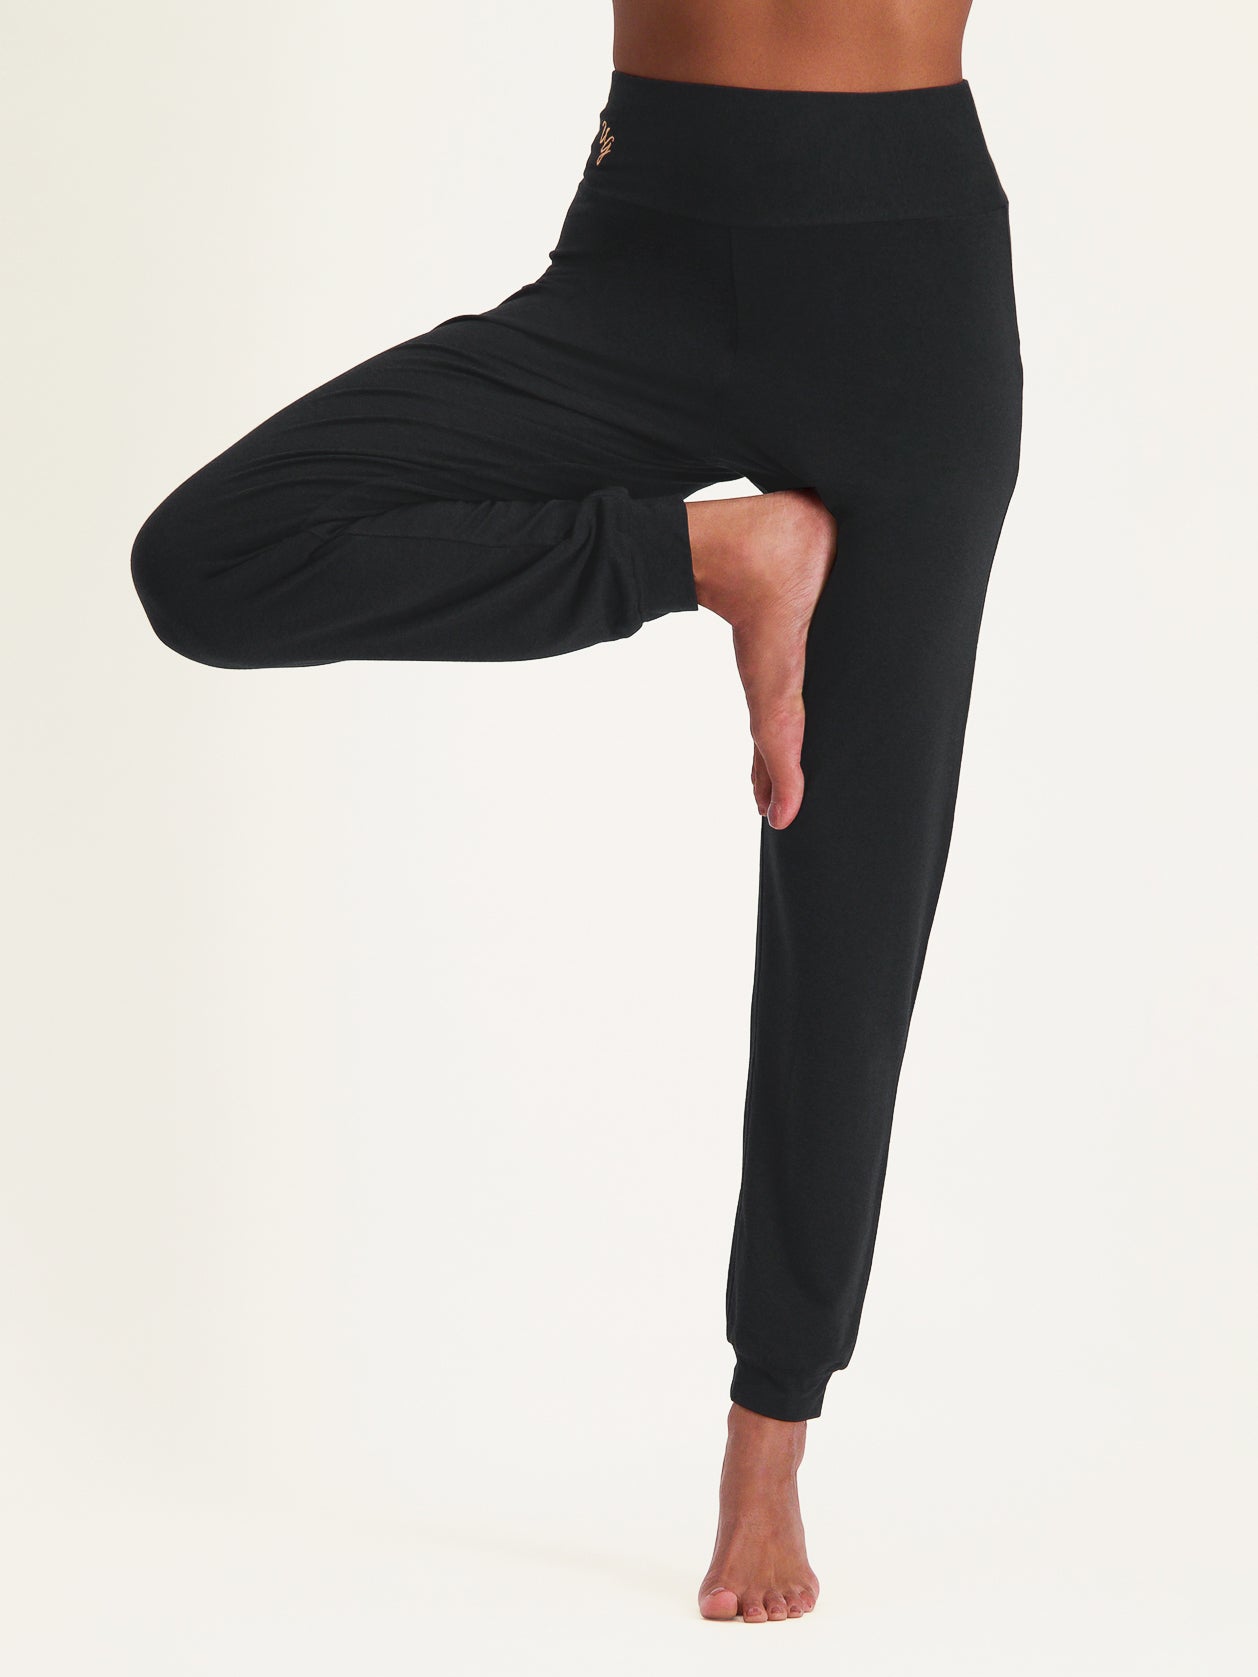 What yoga clothes do you wear to Yoga Nidra? - Urban Goddess